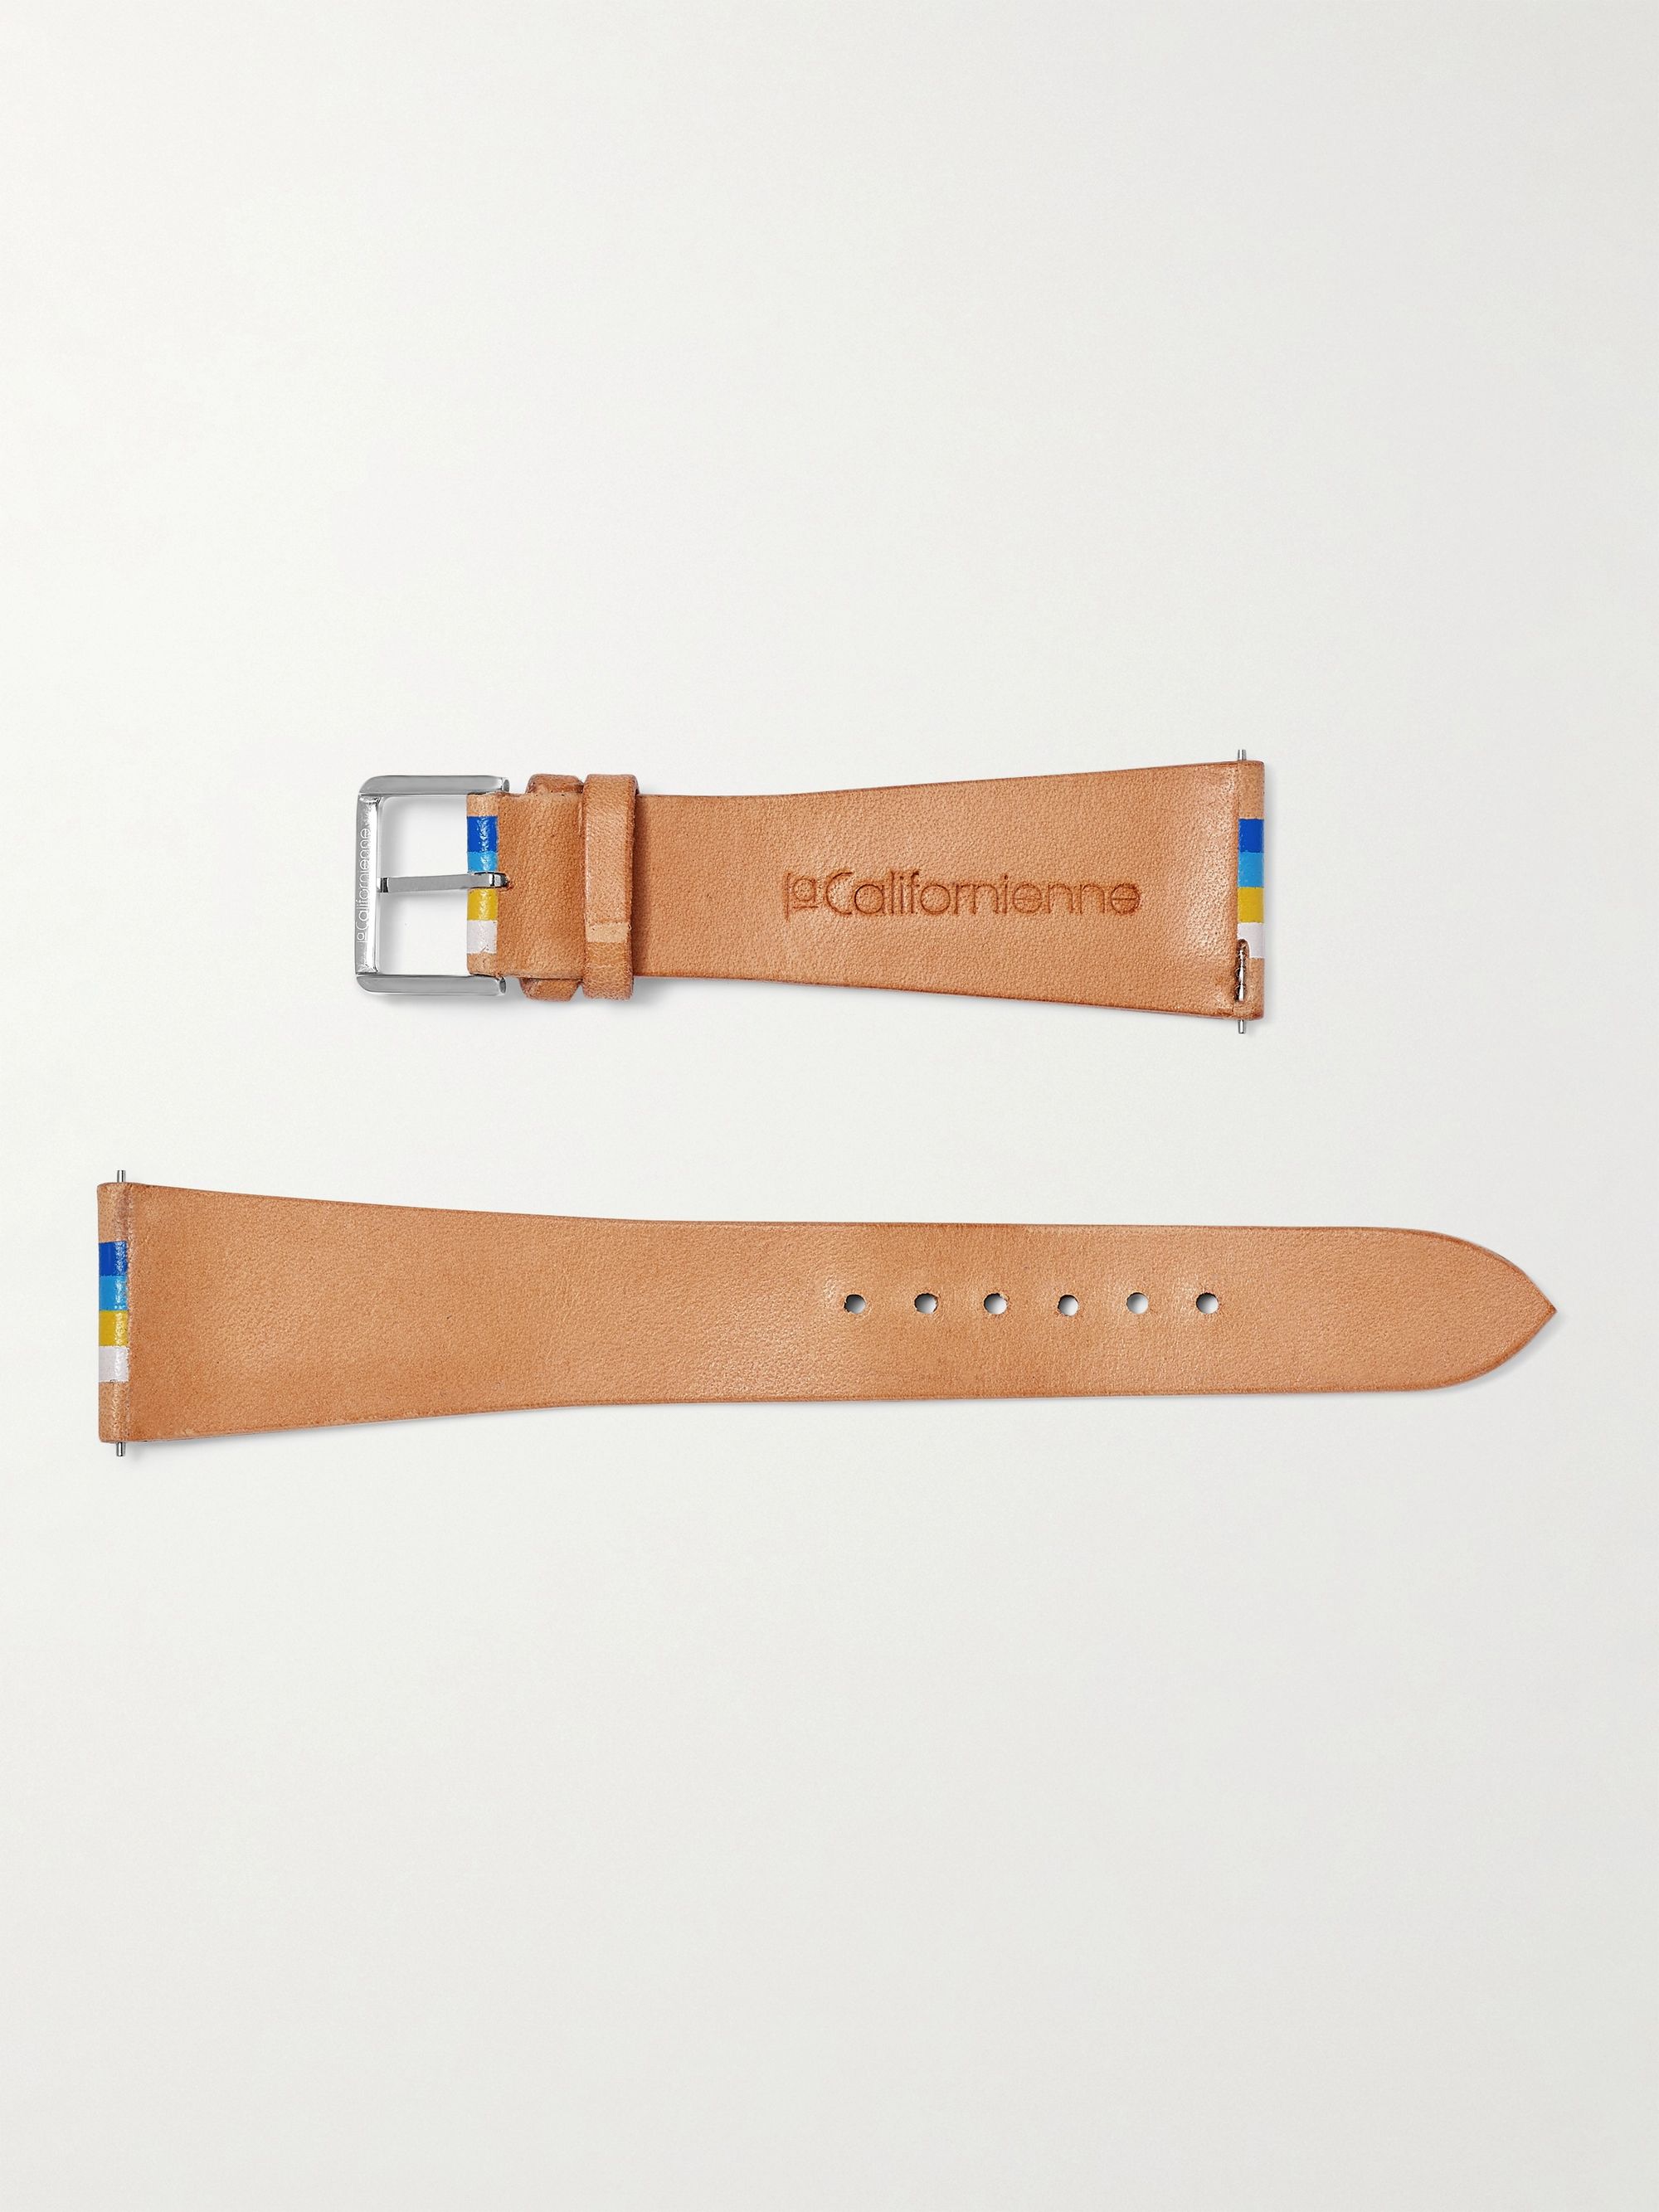 LA CALIFORNIENNE Seabright Striped Leather Watch Strap